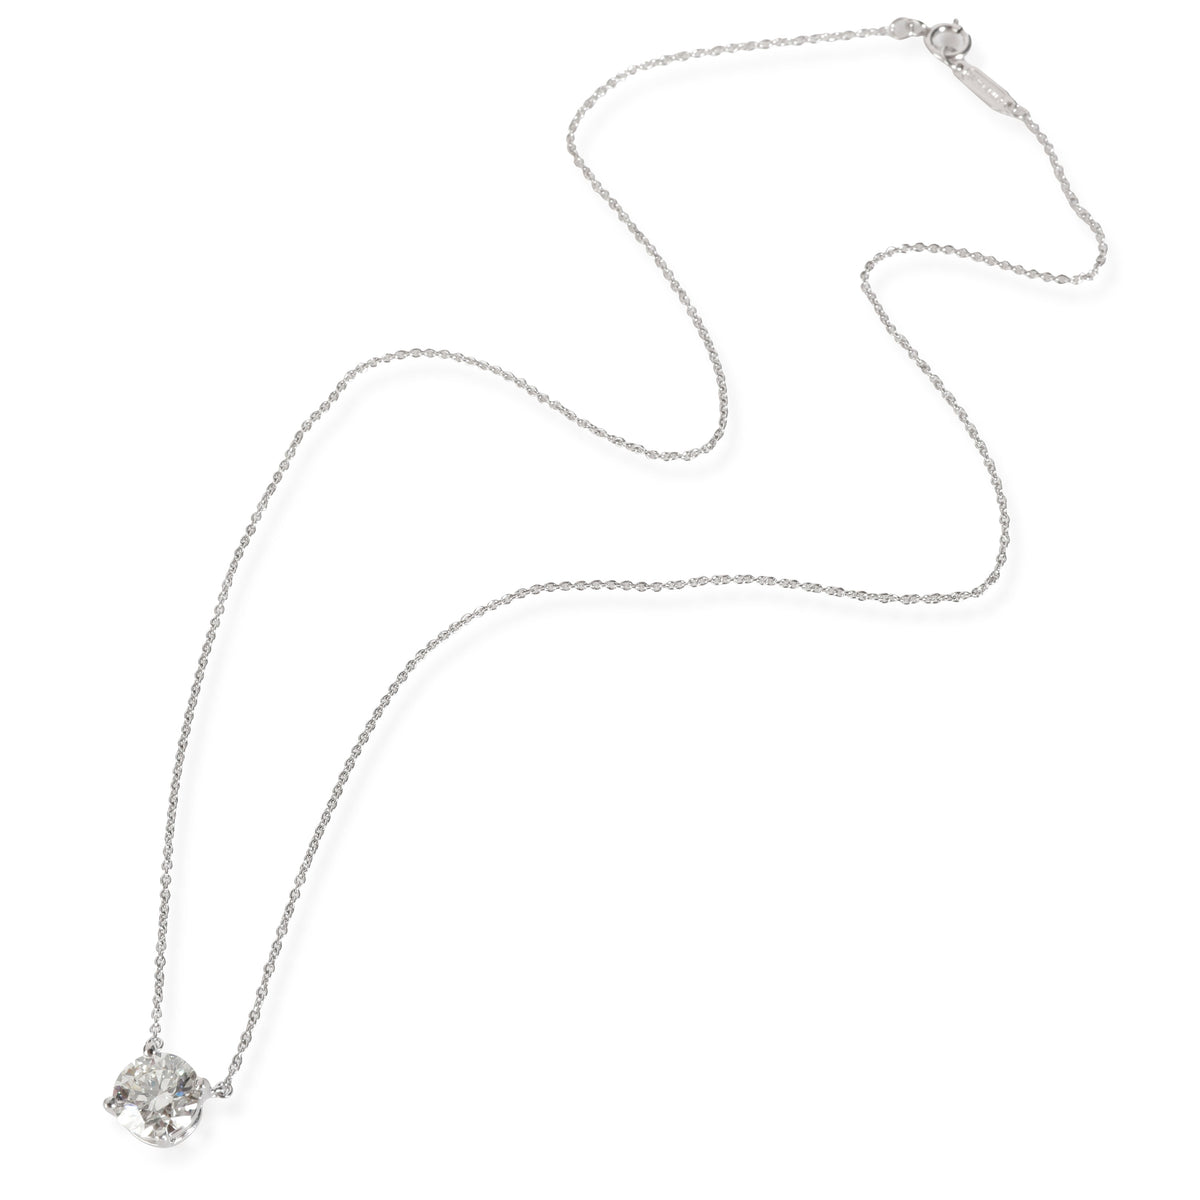 Tiffany & Co. Diamond Solitaire Pendant in Platinum (1.63 ct J/IF)